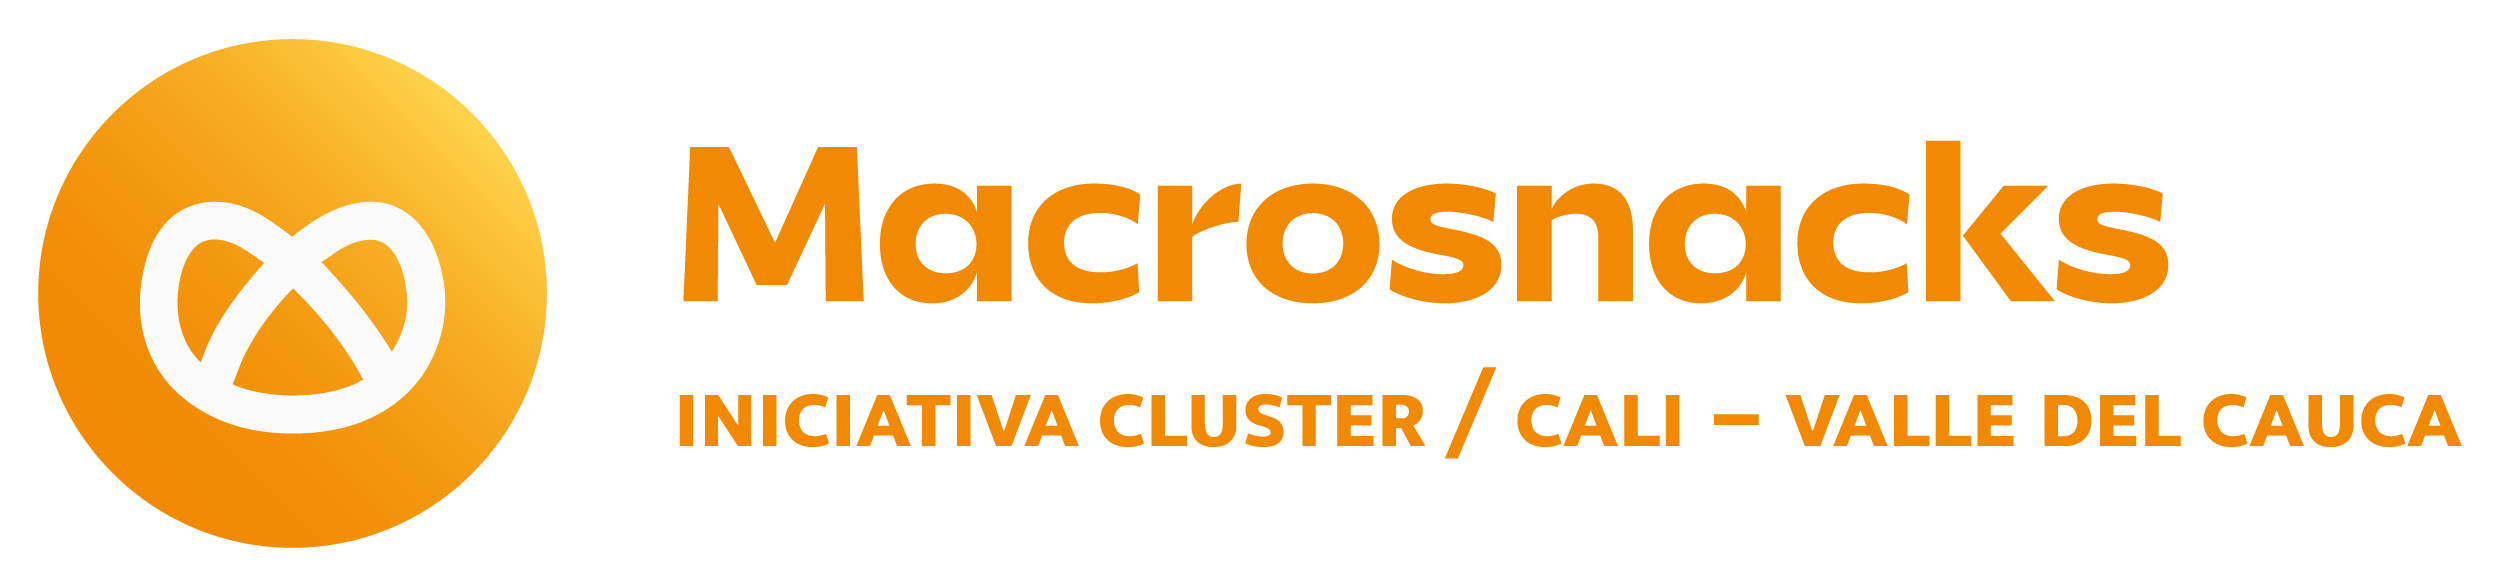 Cluster Macrosnacks